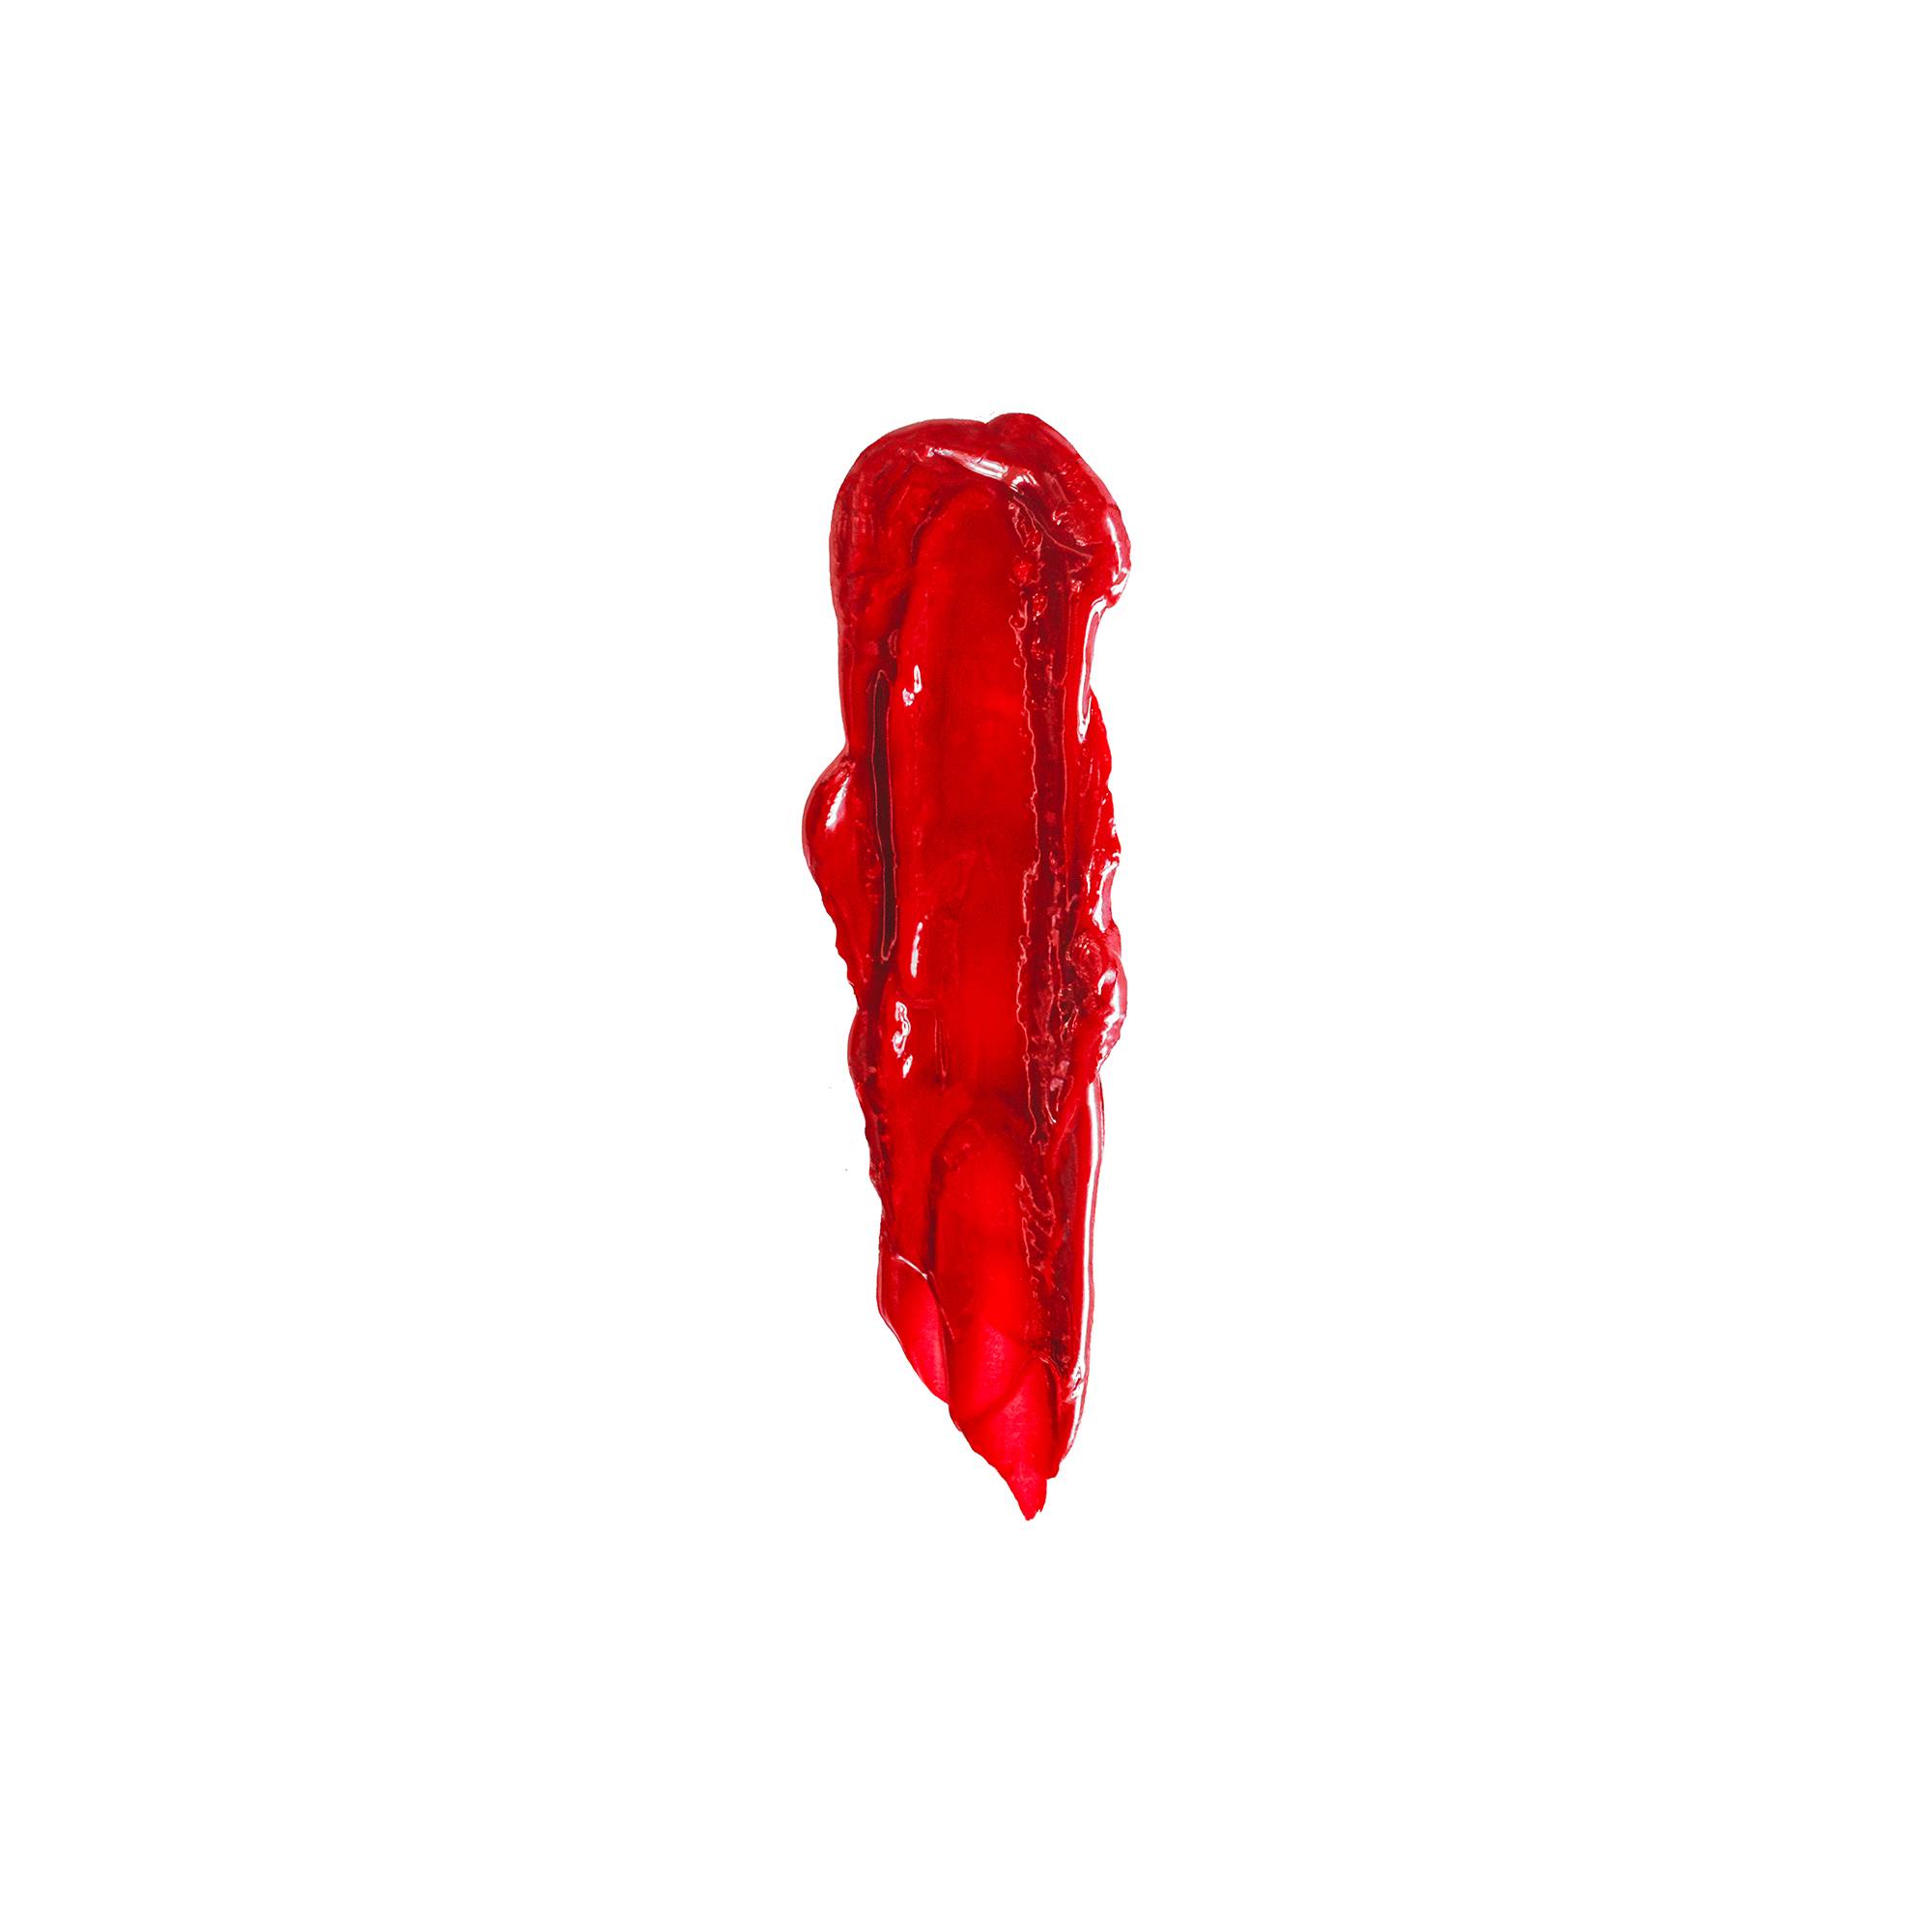 Coloration semi-permanente Diablo rouge de la marque Danger Jones Contenance 118ml - 3